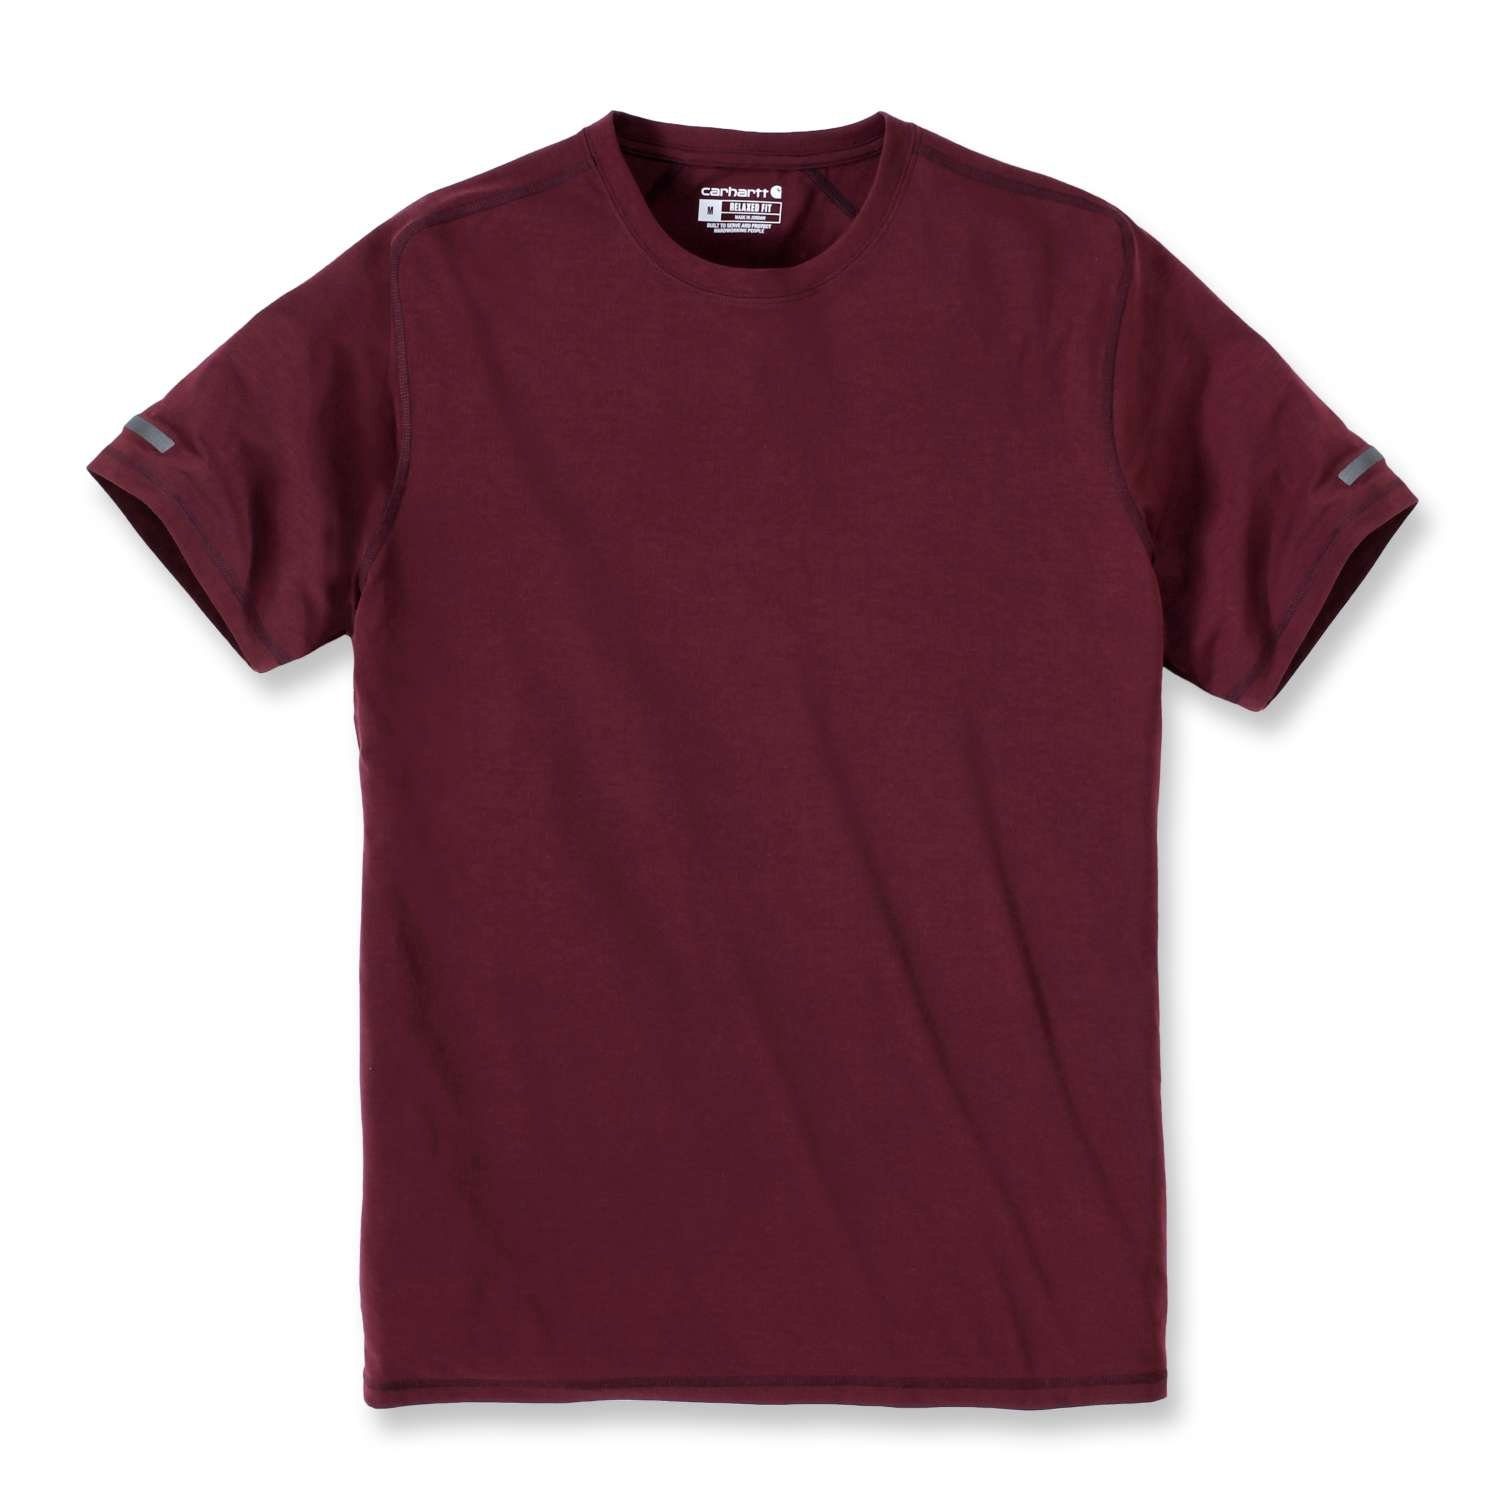 Carhartt T-Shirt Carhartt Herren T-Shirt Extremes Relaxed Fit Adult bordeaux | T-Shirts